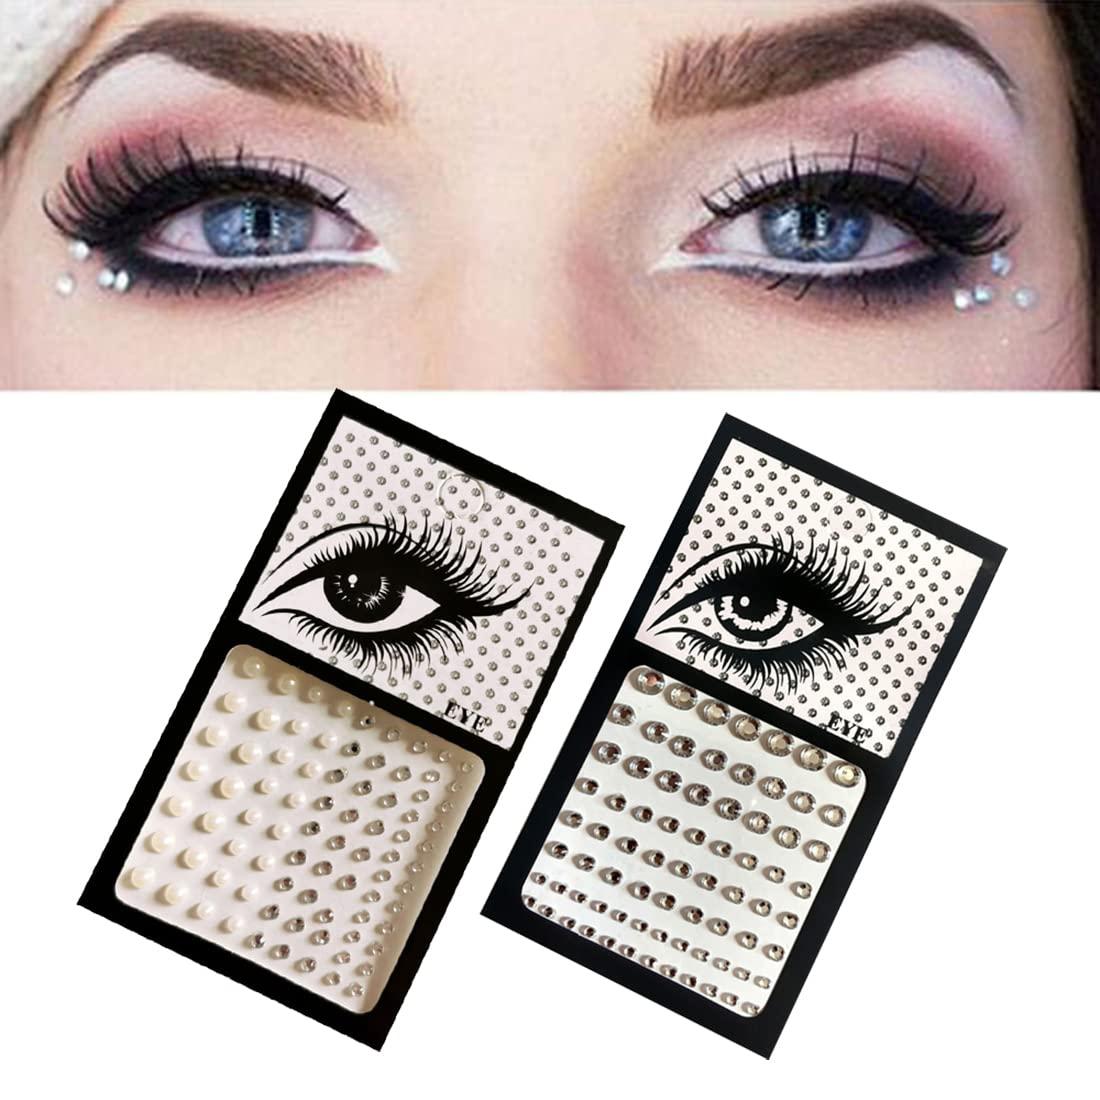 MINGT Makeup Rhinestones for Eyes Face Gems Stickers Eye Jewels